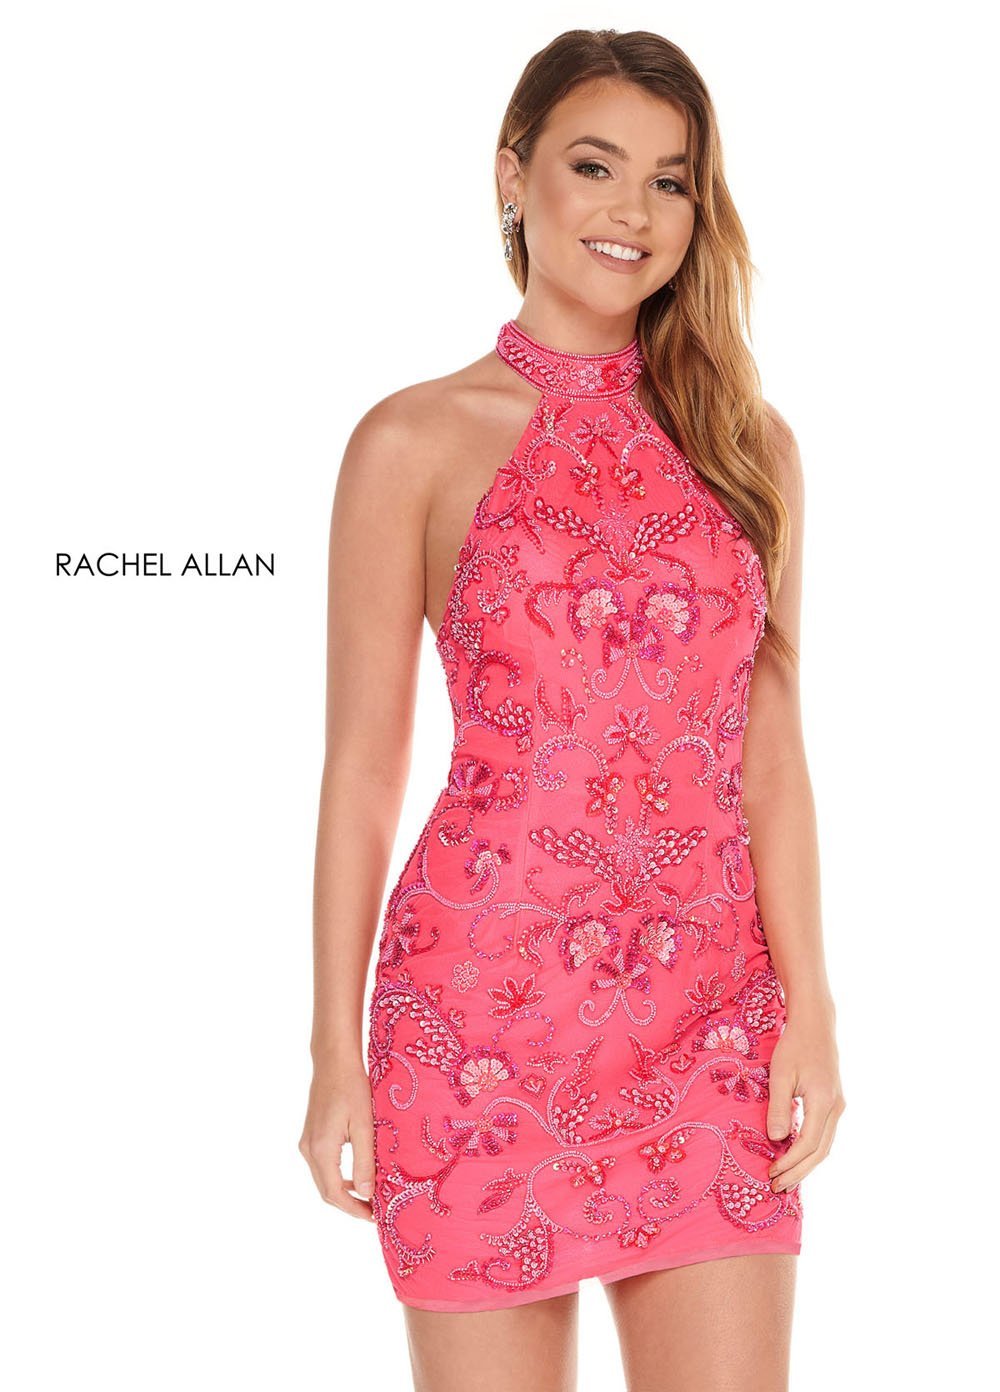 Rachel Allan 40022 dress images in these colors: Neon Pink Coral, Neon Green, Neon Orange, Neon Yellow.